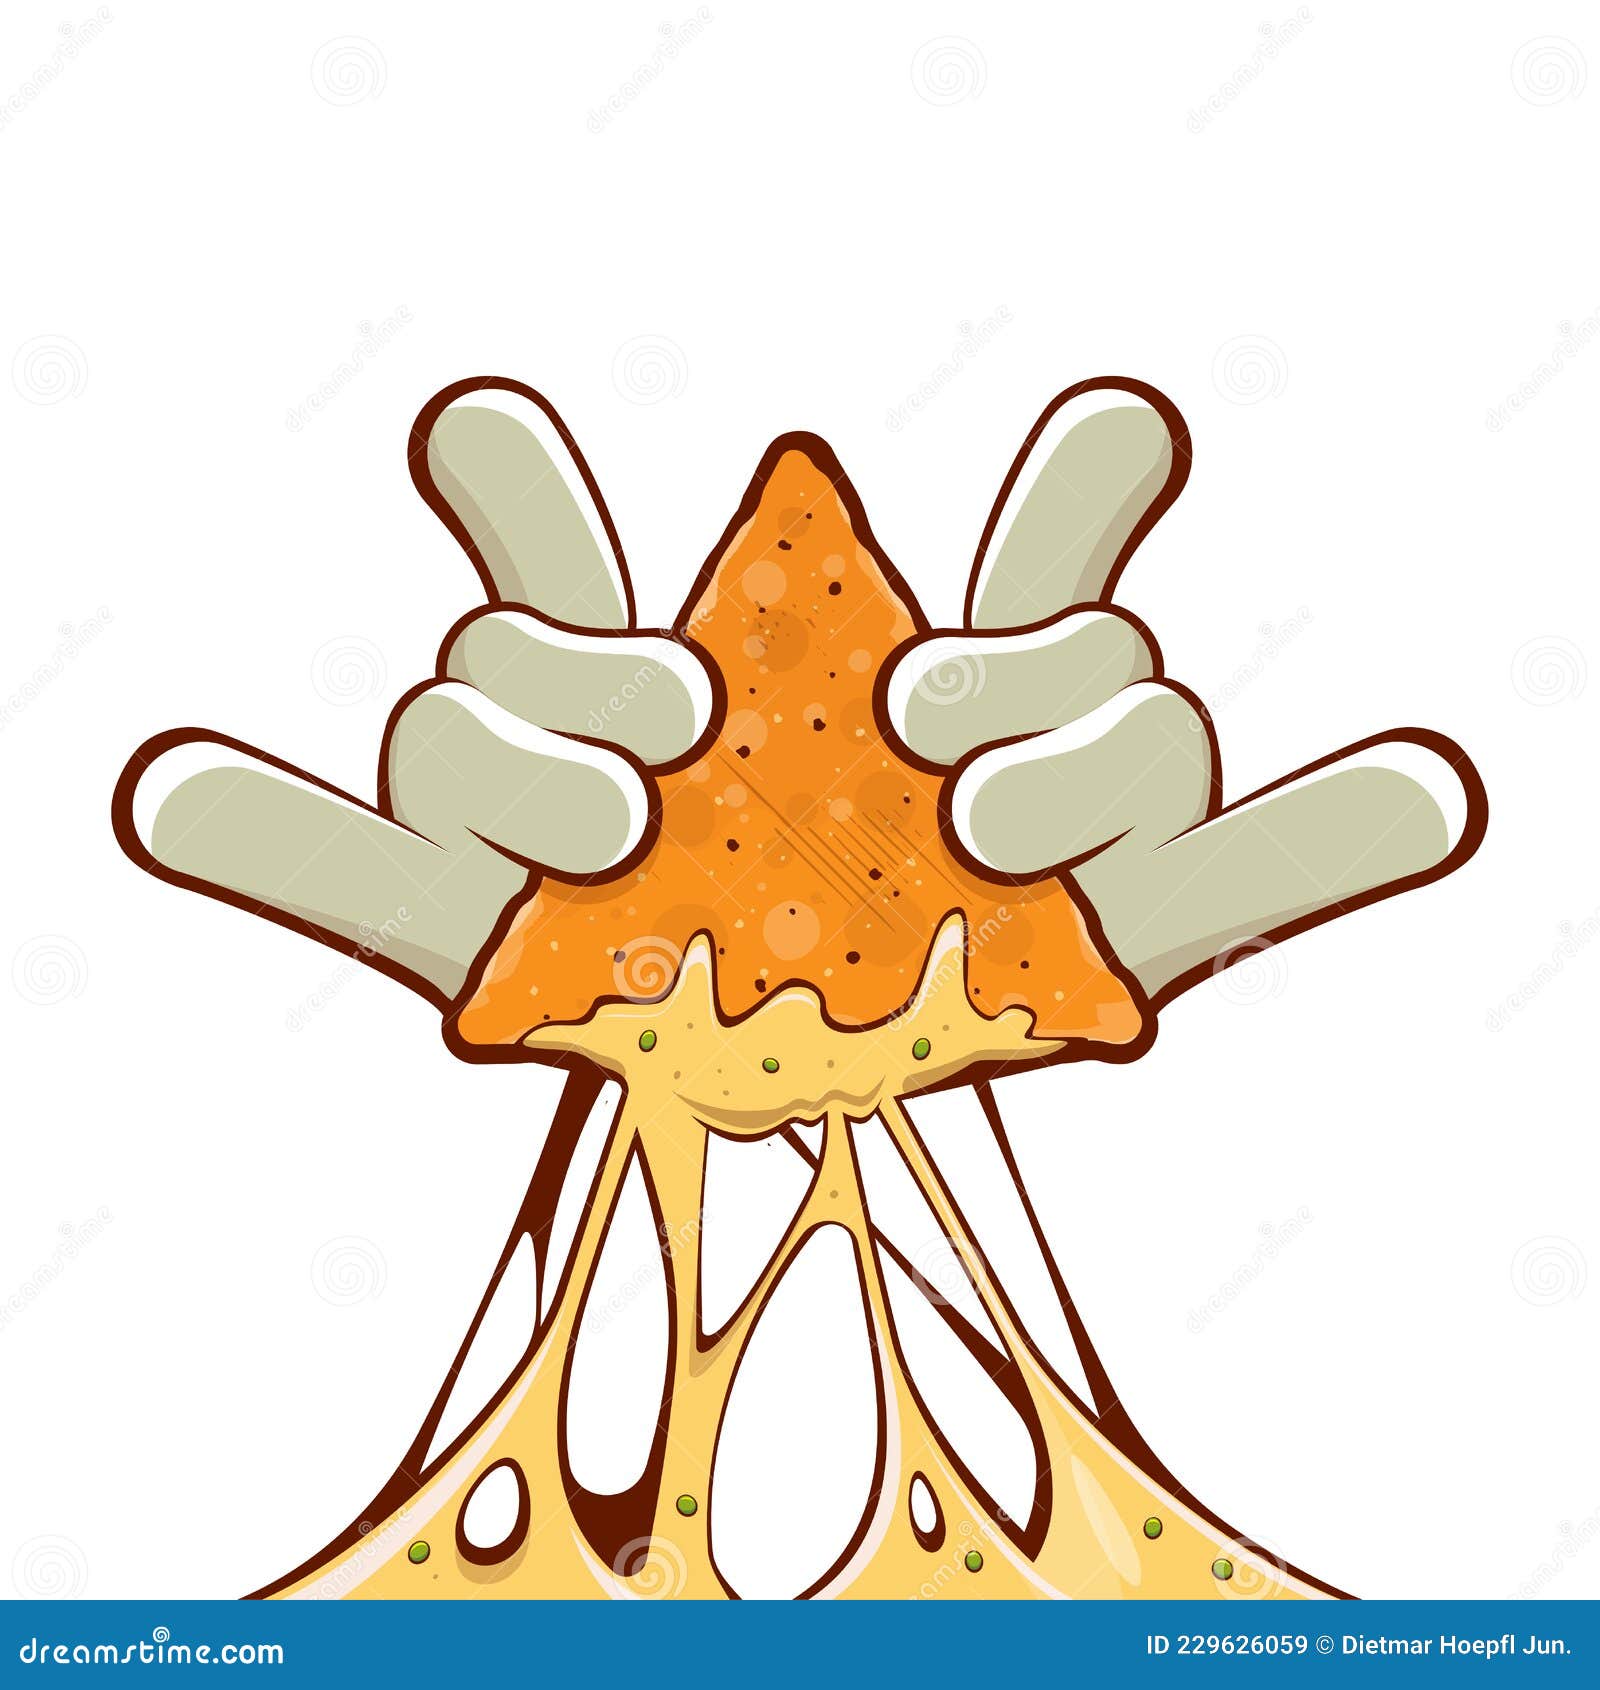   of cartoon hands holding a nacho